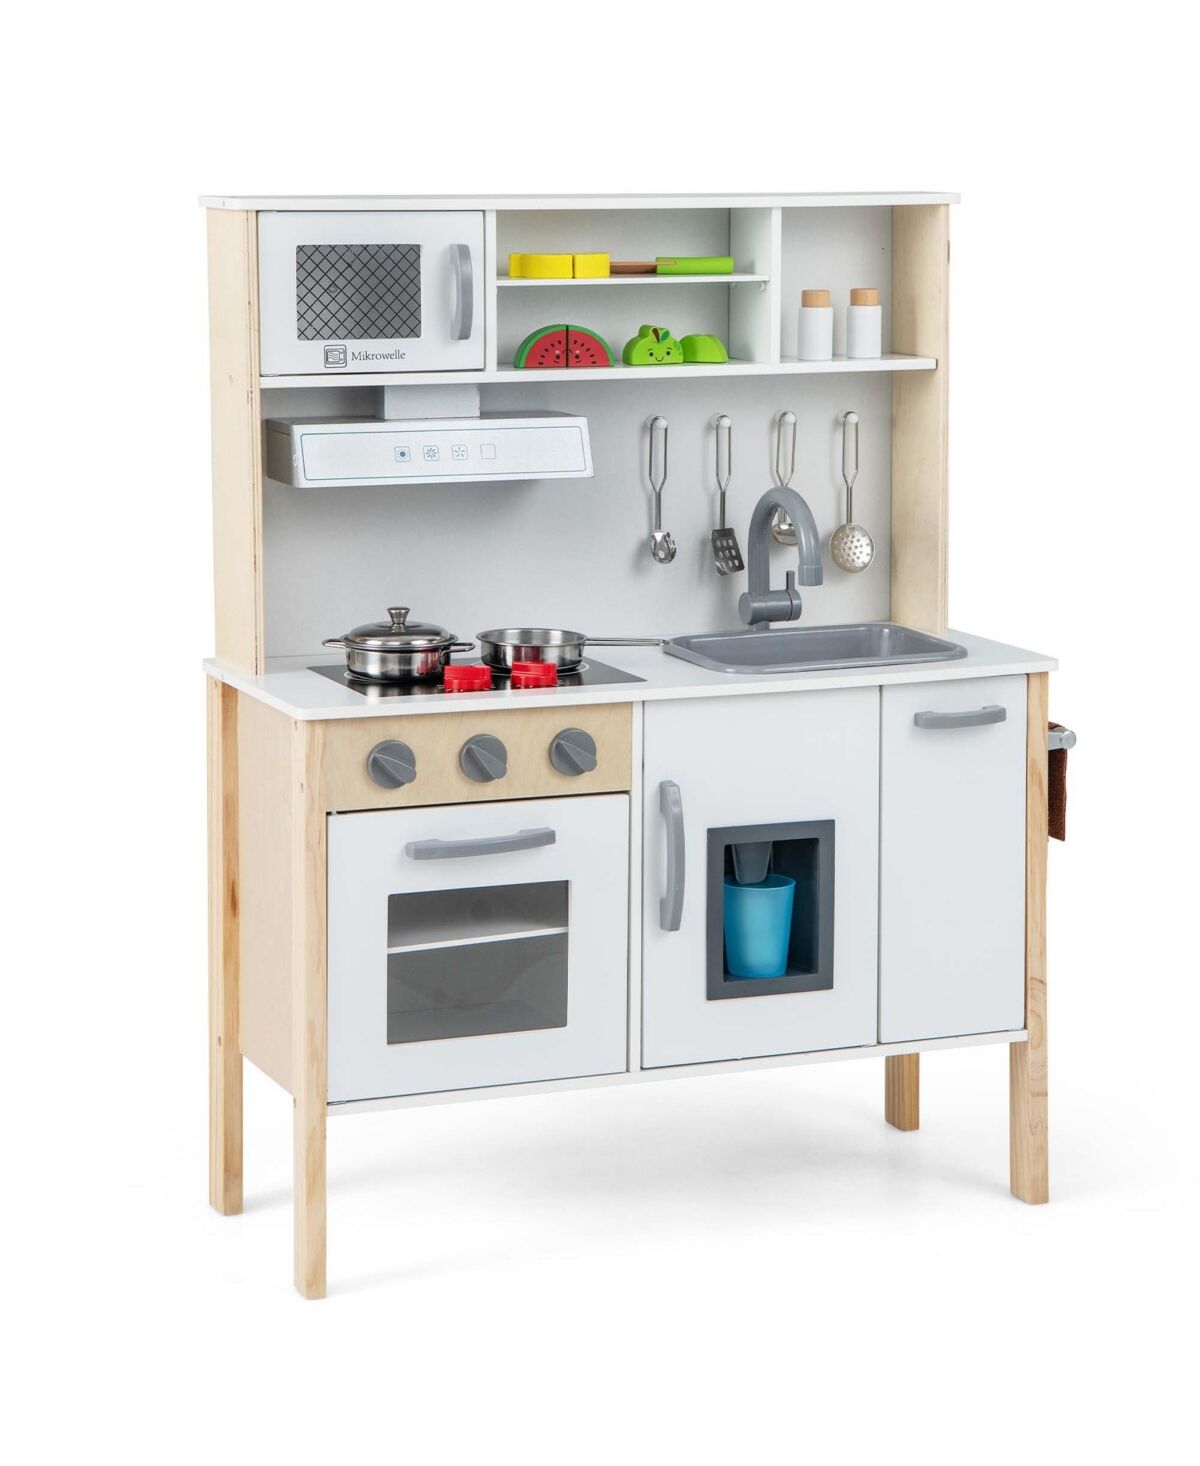 Costway Kids Kitchen Play set Wooden Pretend Play Chef Toy w/ Microwave & Accessories - White